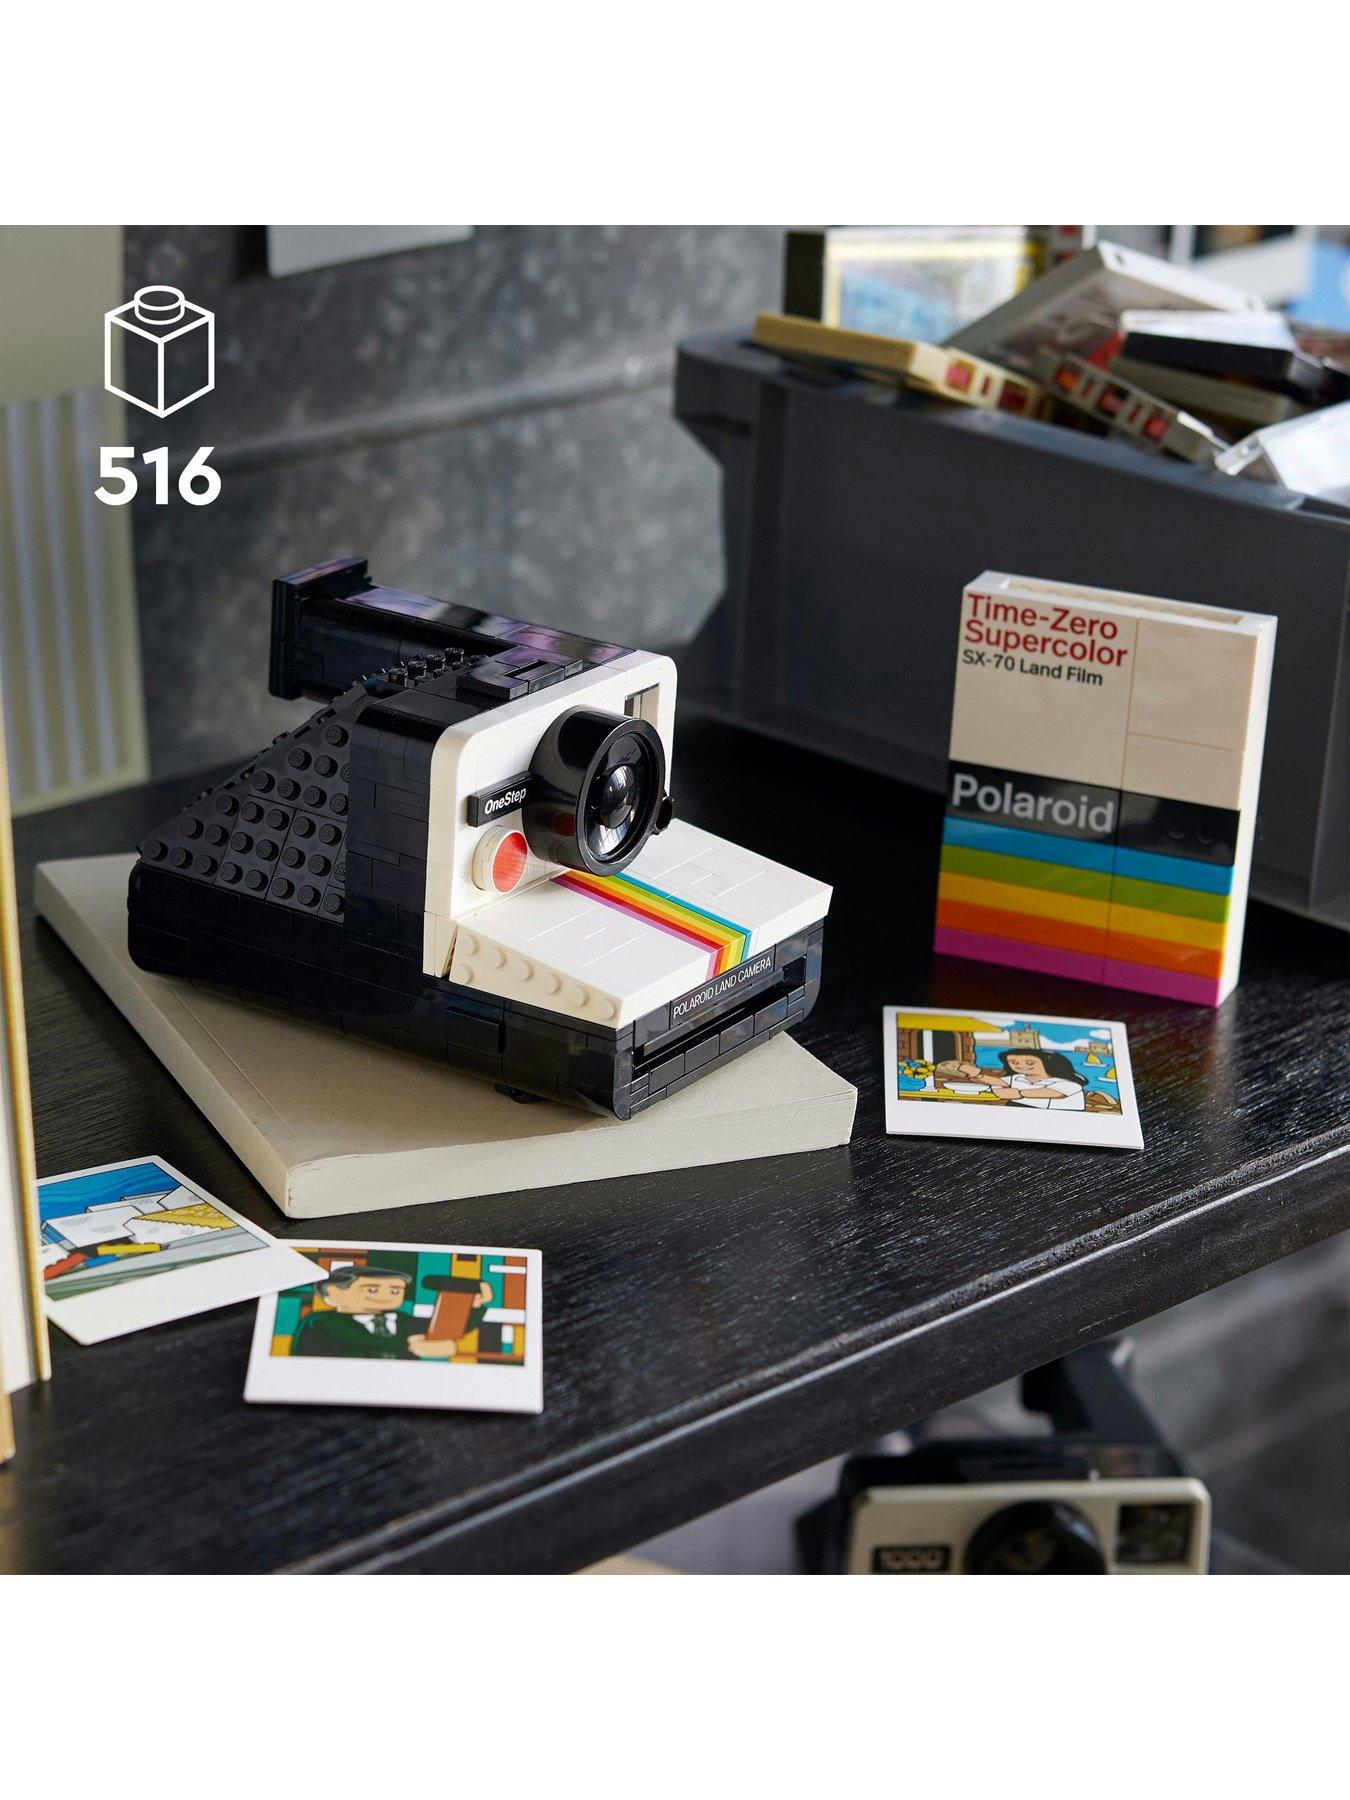 LEGO Ideas Polaroid OneStep SX-70 Camera 21345 by LEGO Systems Inc.